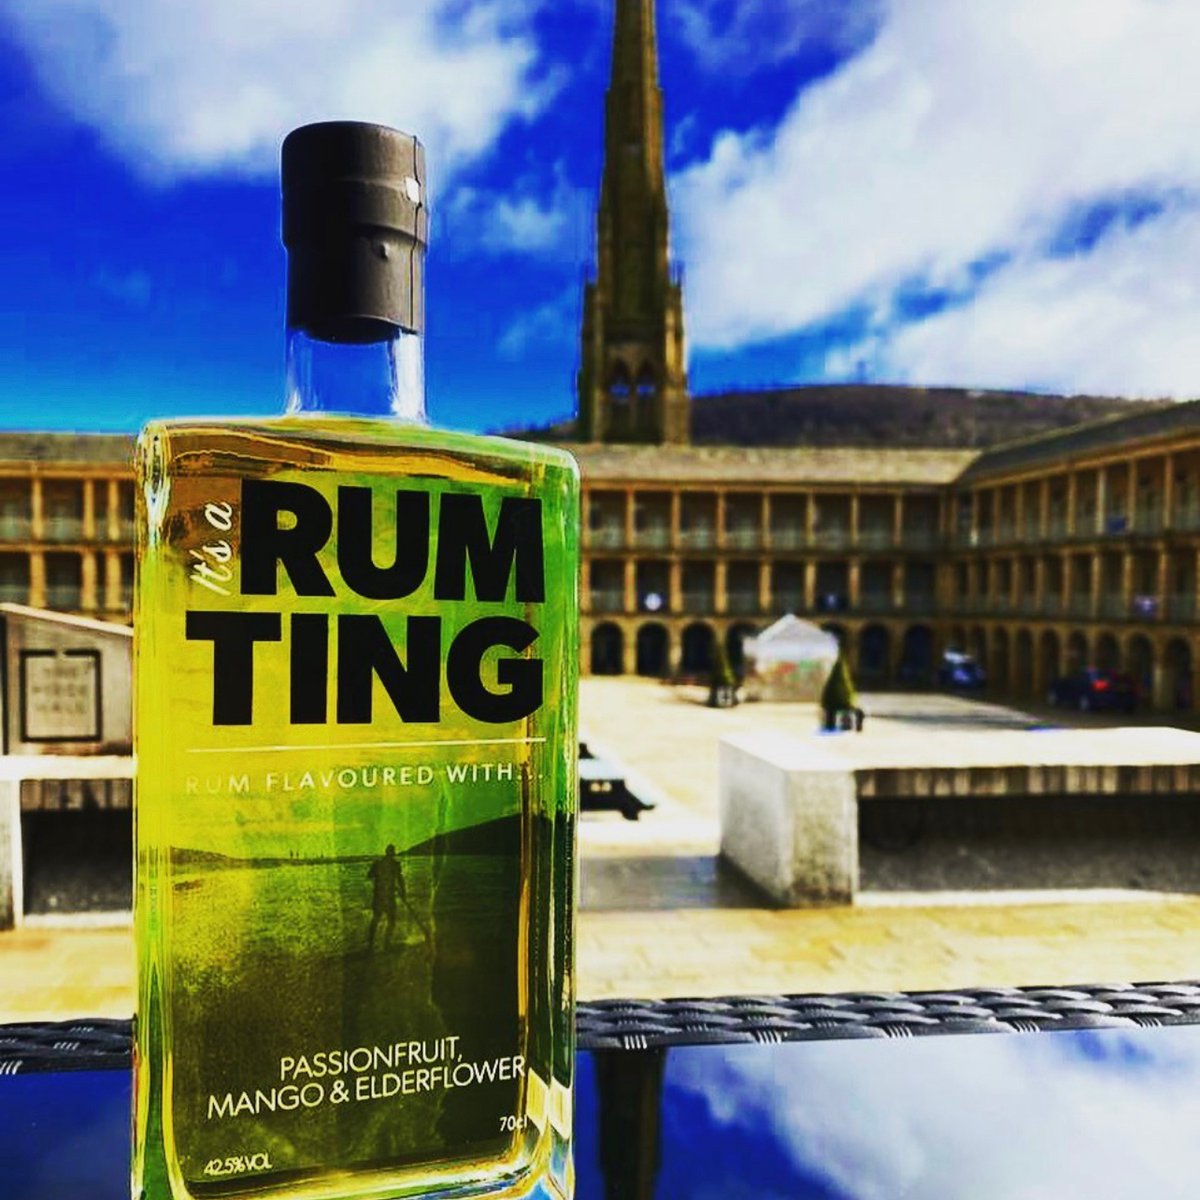 Amazing shot of #RumTing courtesy of @the_winebarrel 📸🍹

#ItsARumTing #RumTing #BringYourTing #GinAndTonic #Gin #GinLovers